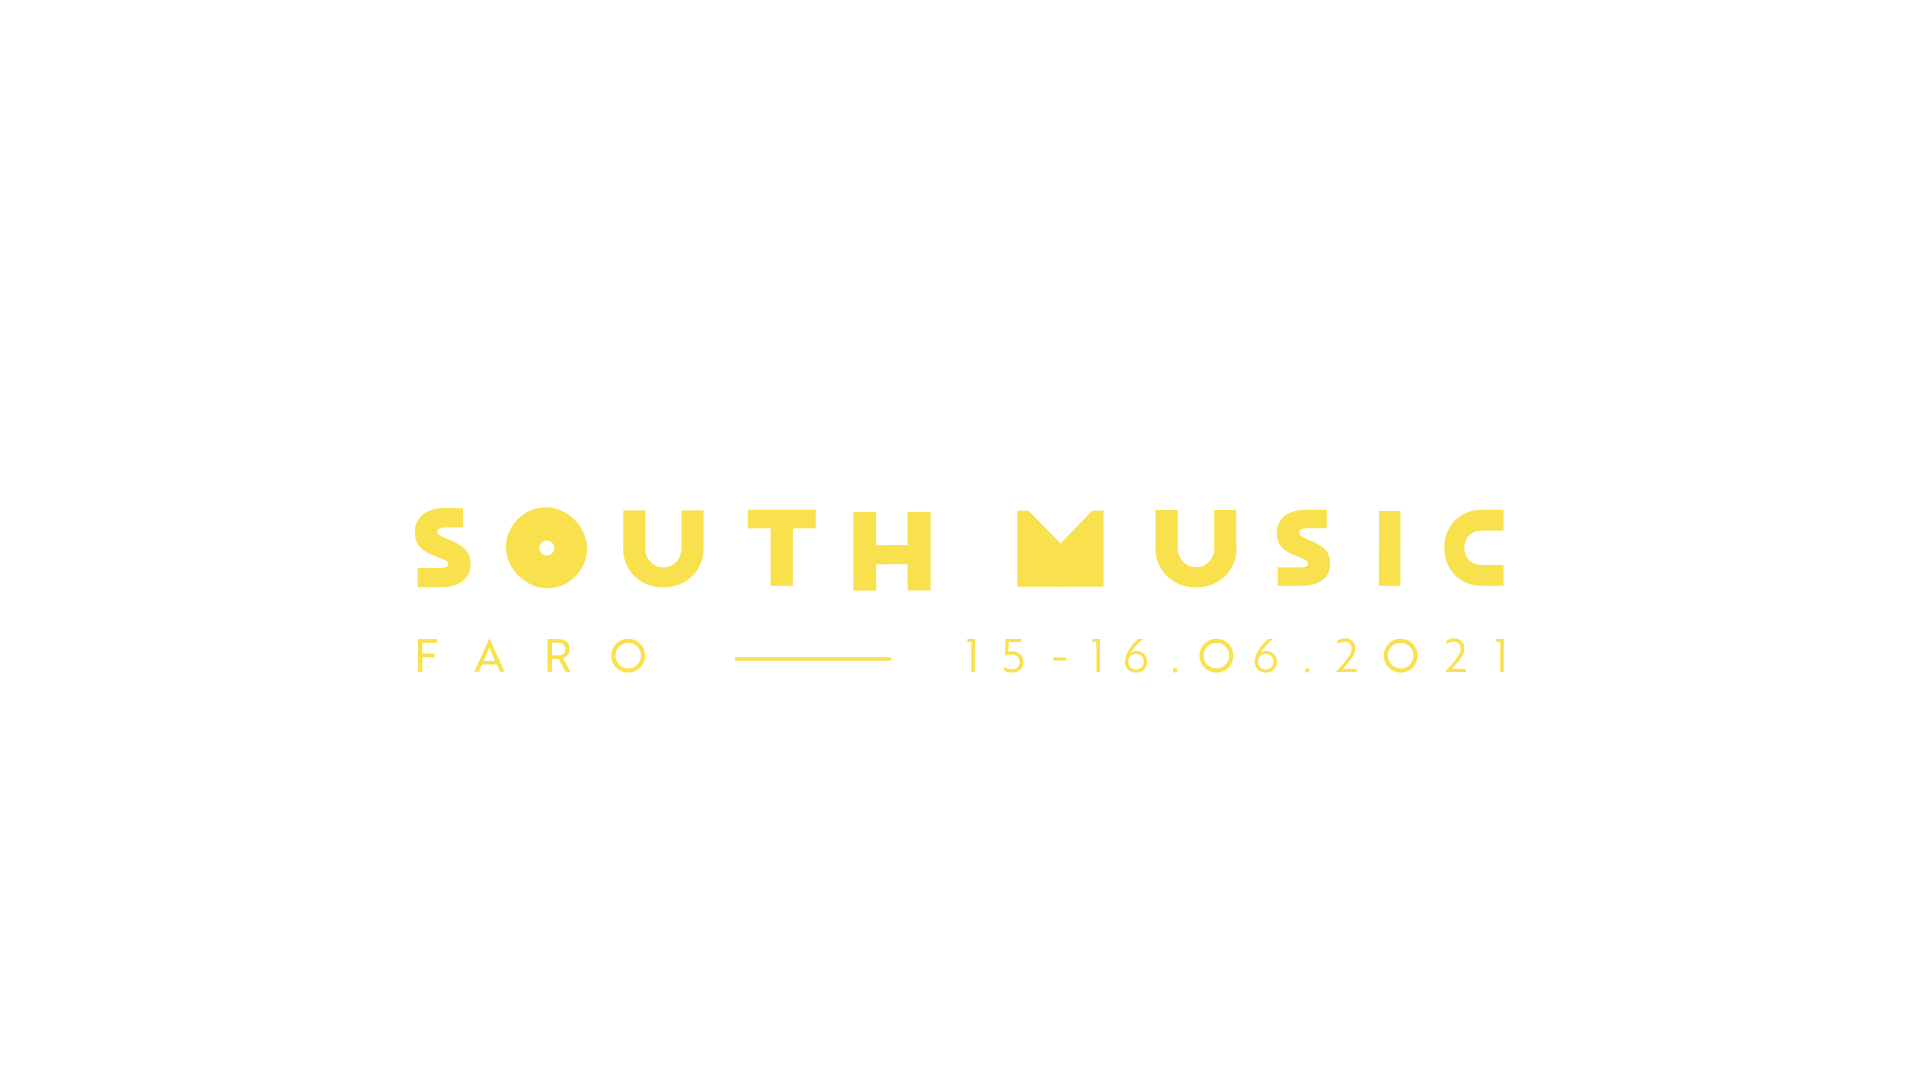 South Music-15-16.06.2021